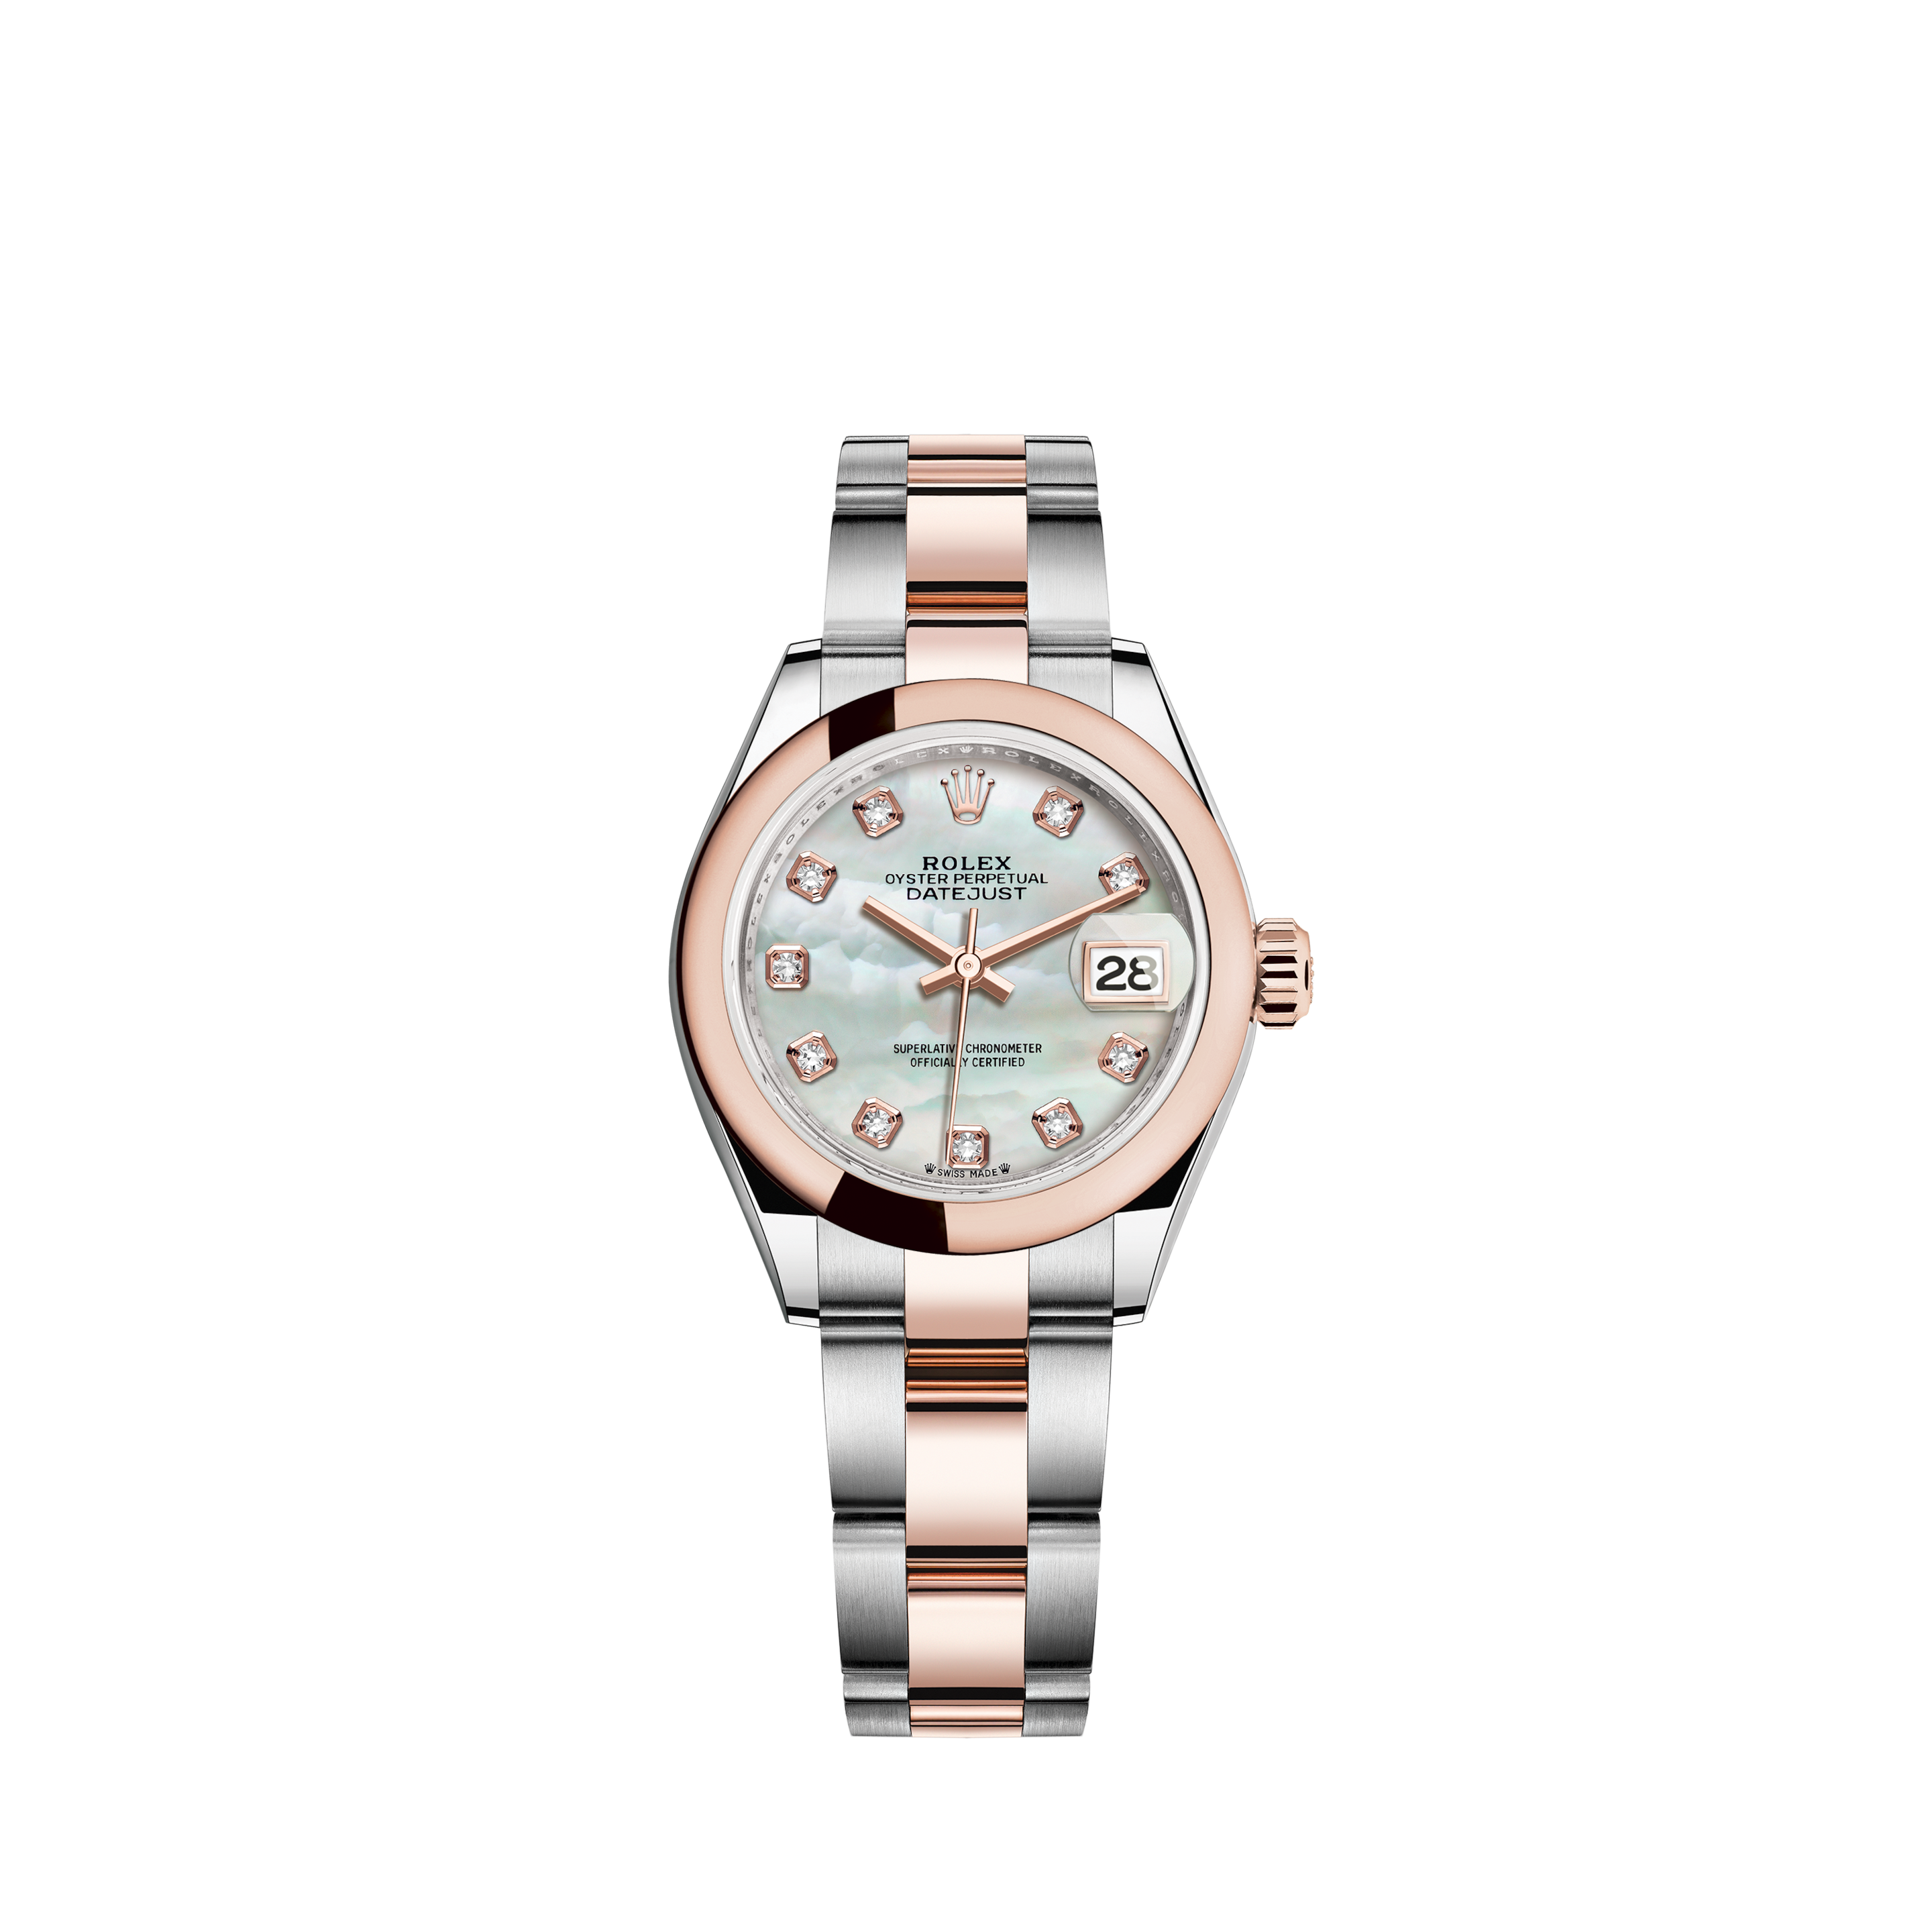 Rolex Lady Datejust 18K (0.750) Yellow Gold Automatic Women's Watch Gold Ref. 6917